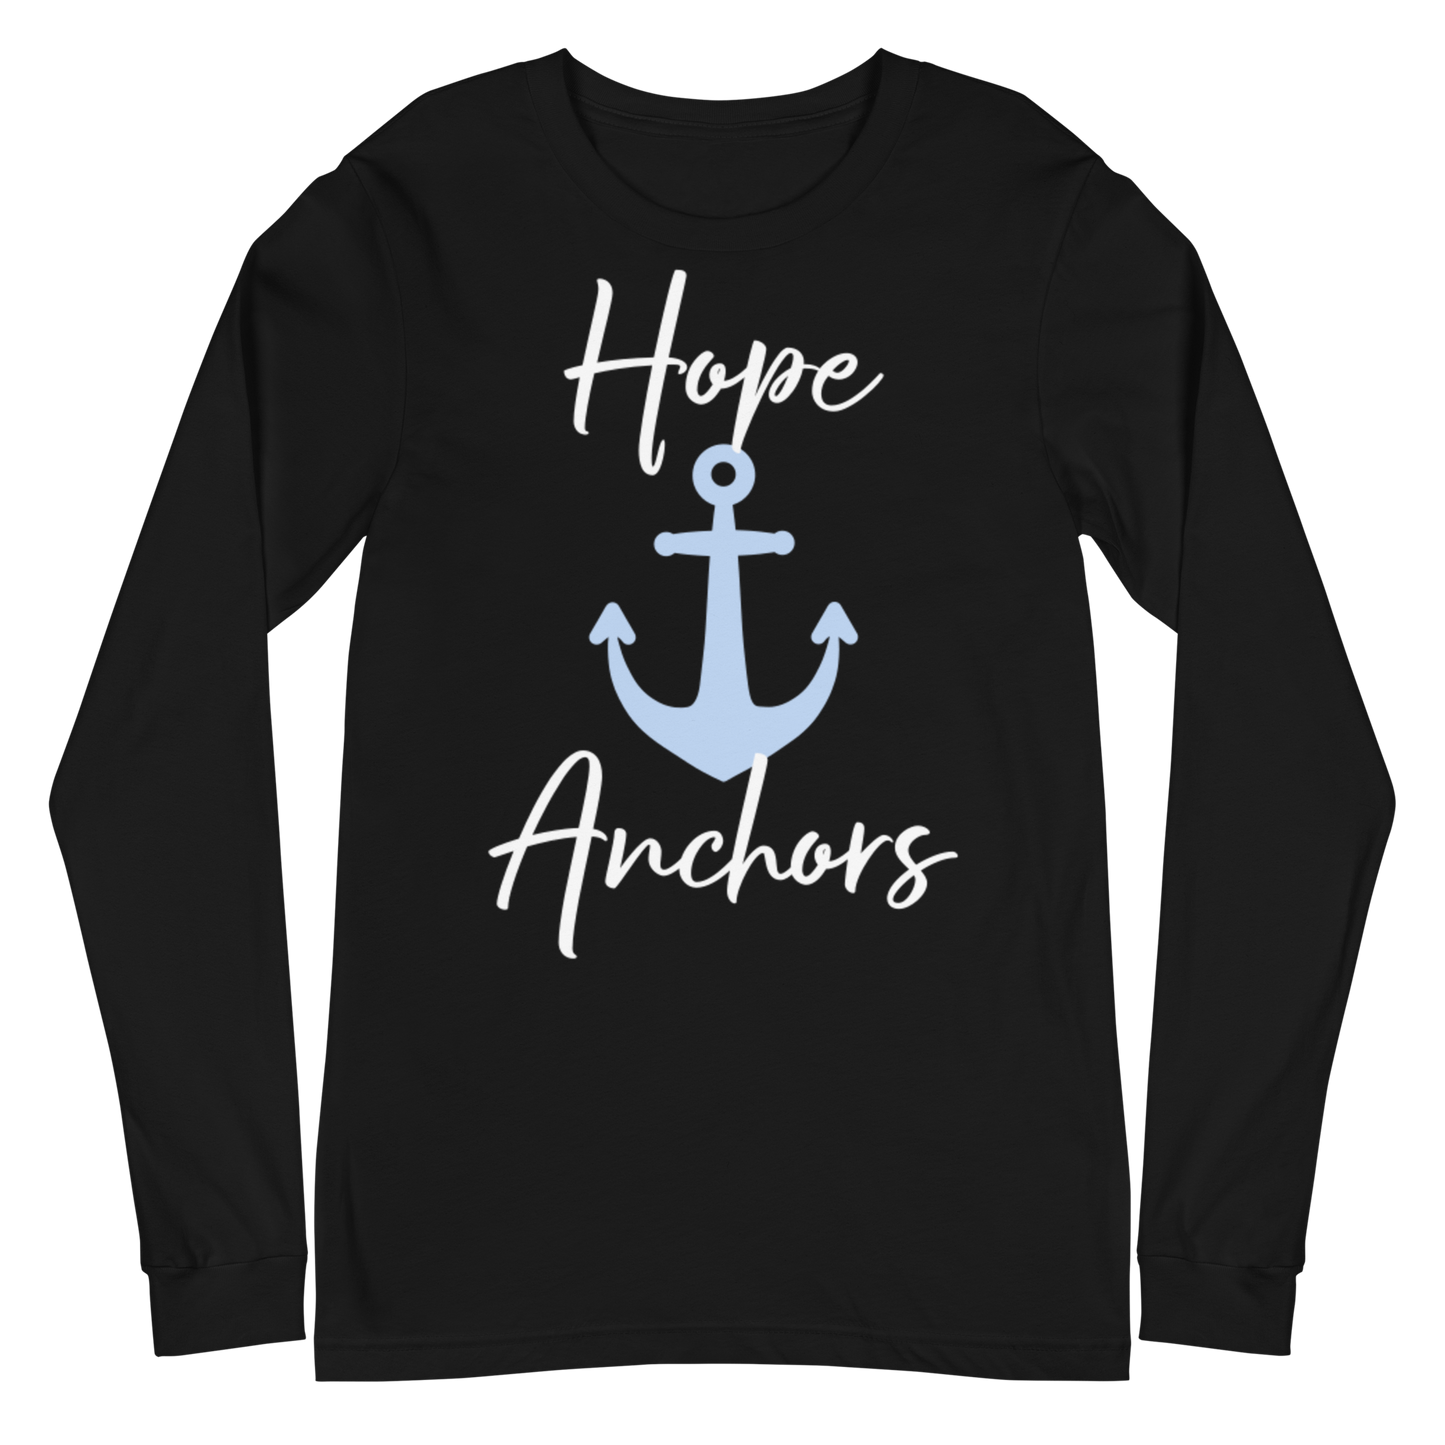 Hope Anchors - Women's Long Sleeve